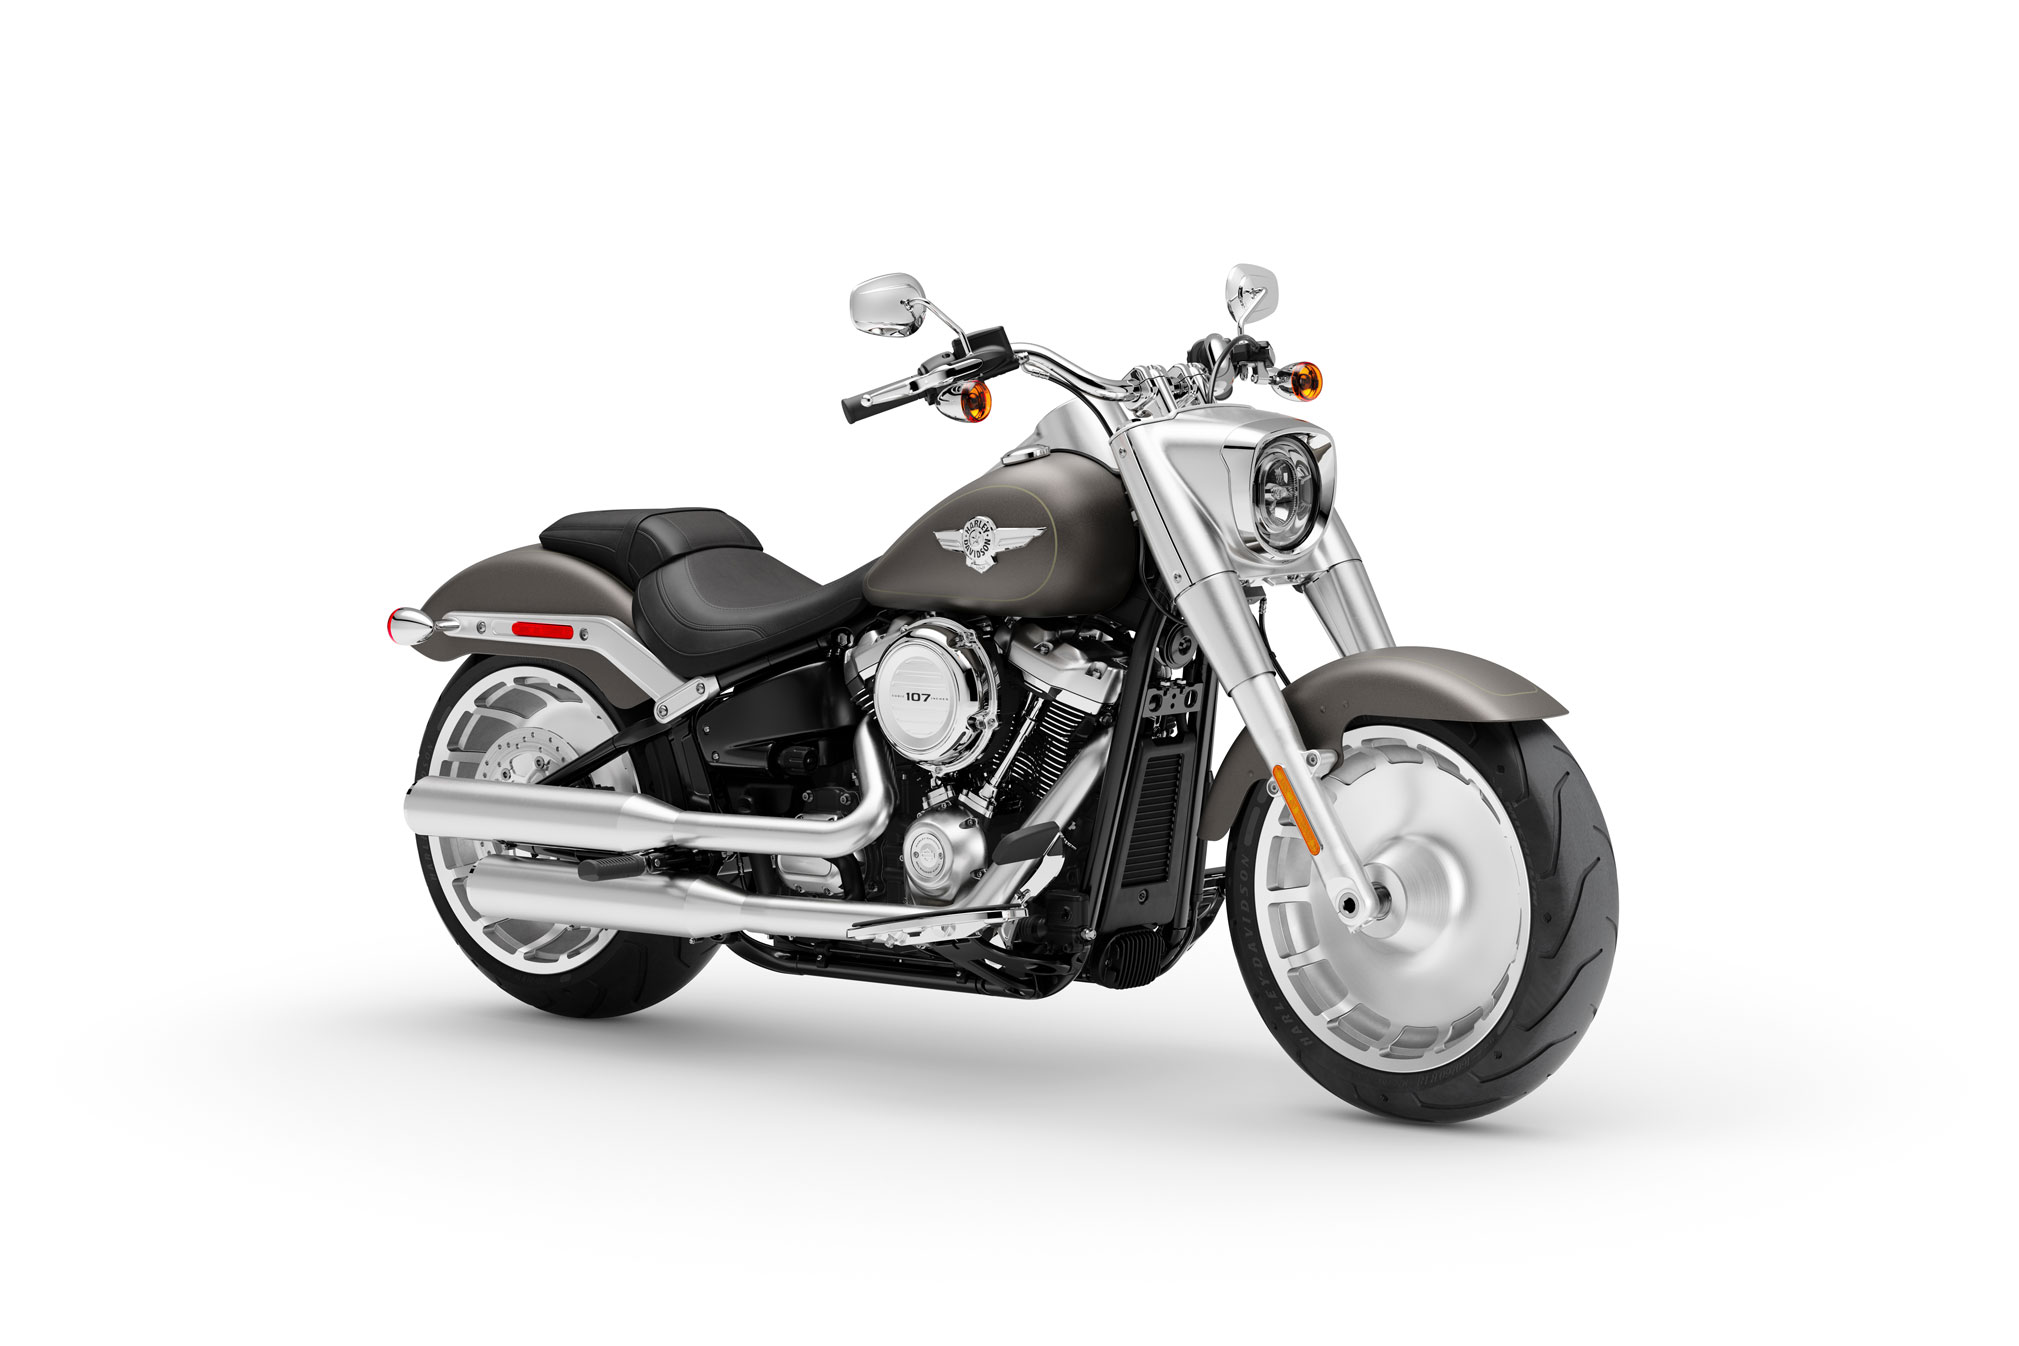 2019 Harley Davidson Fat Boy Guide Total Motorcycle